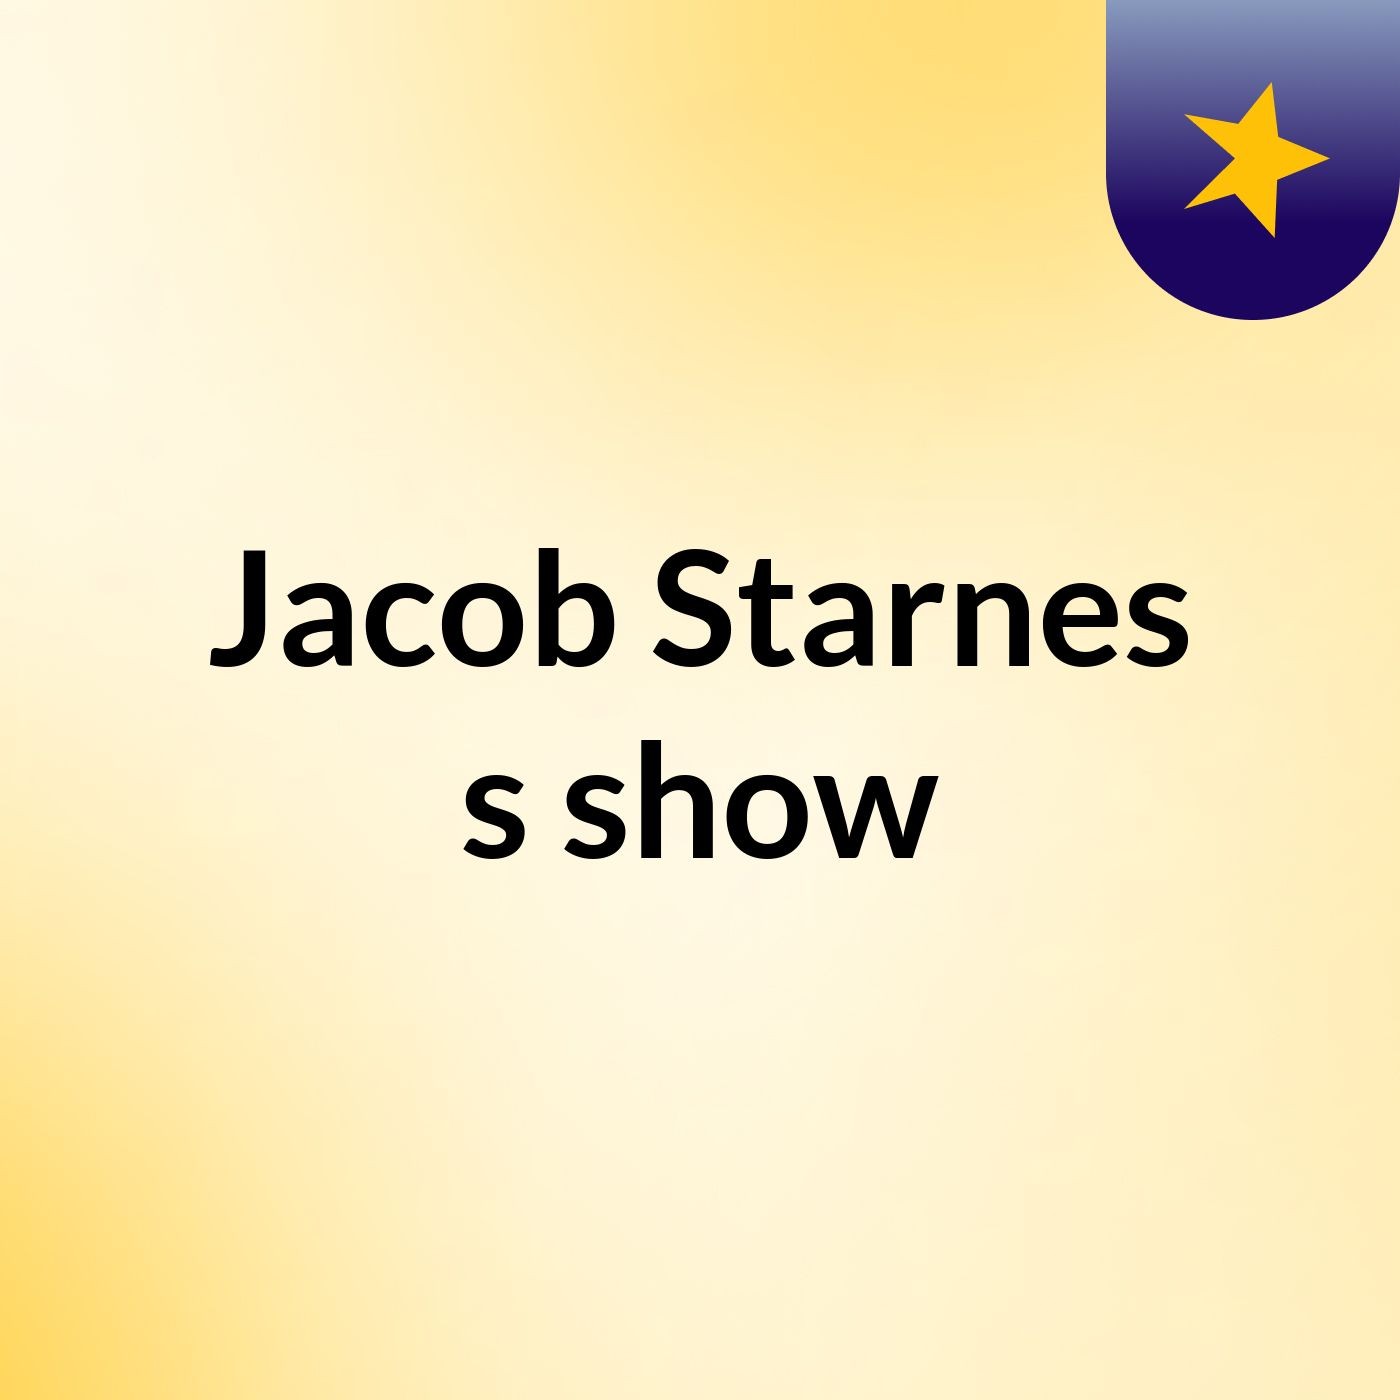 Jacob Starnes's show